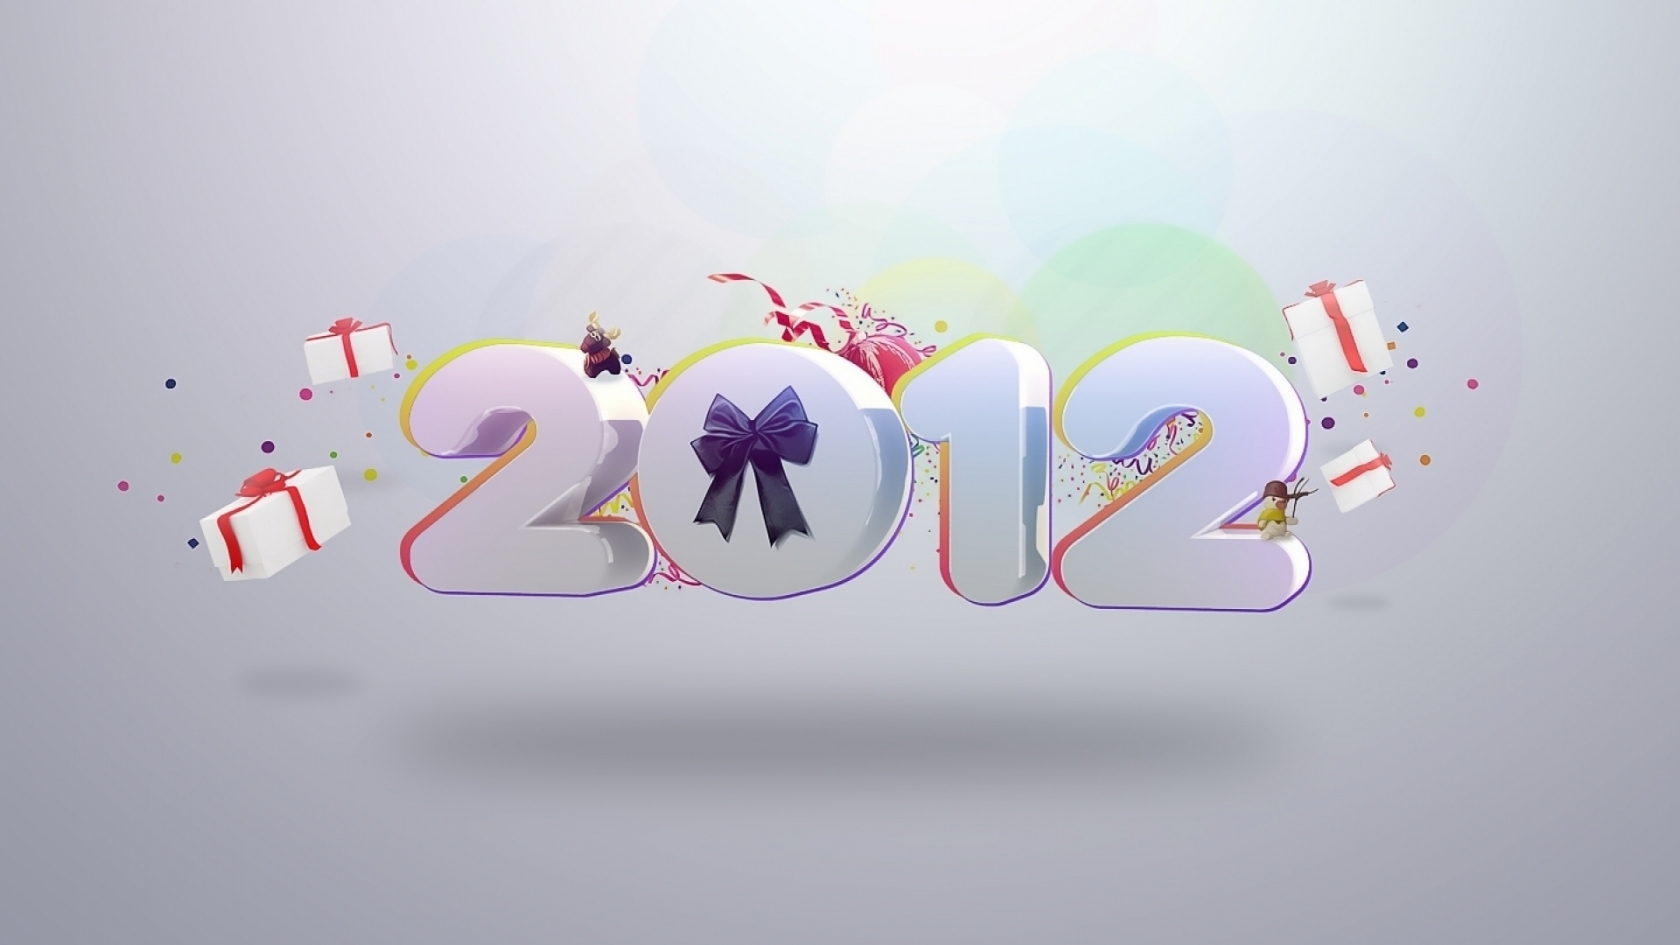 2012 Year Celebration for 1680 x 945 HDTV resolution